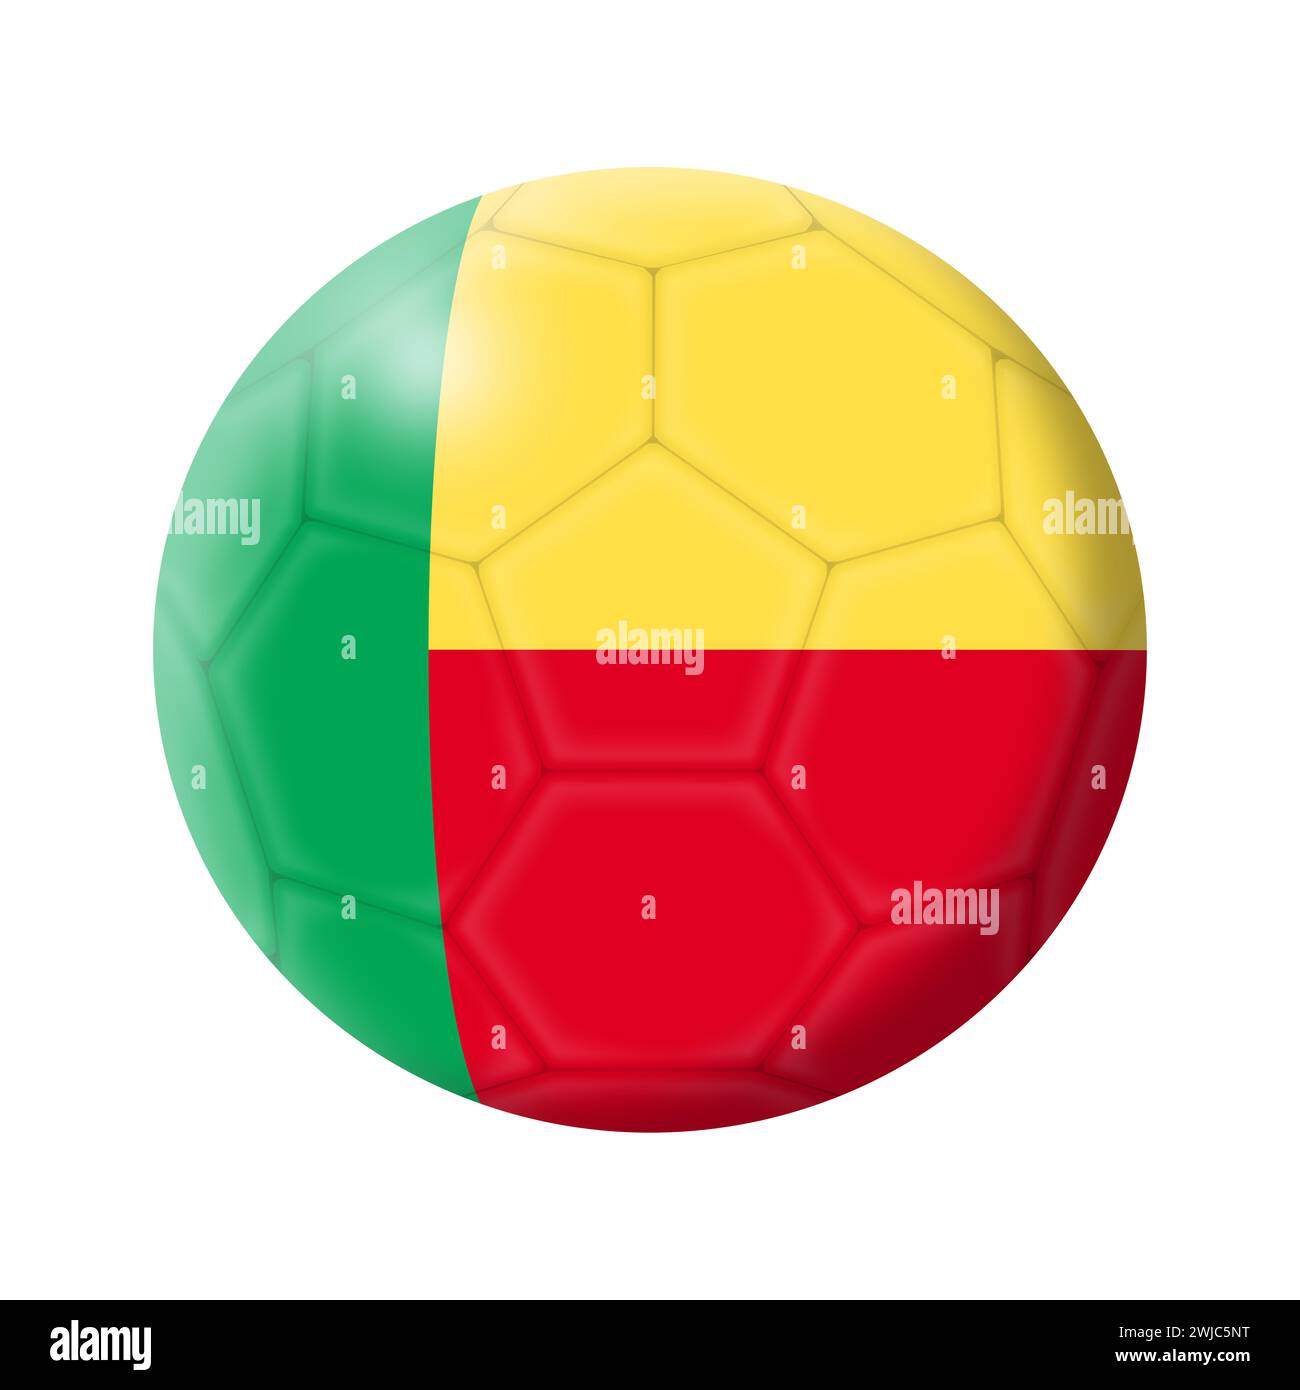 Benin soccer ball football illustration Stock Photo